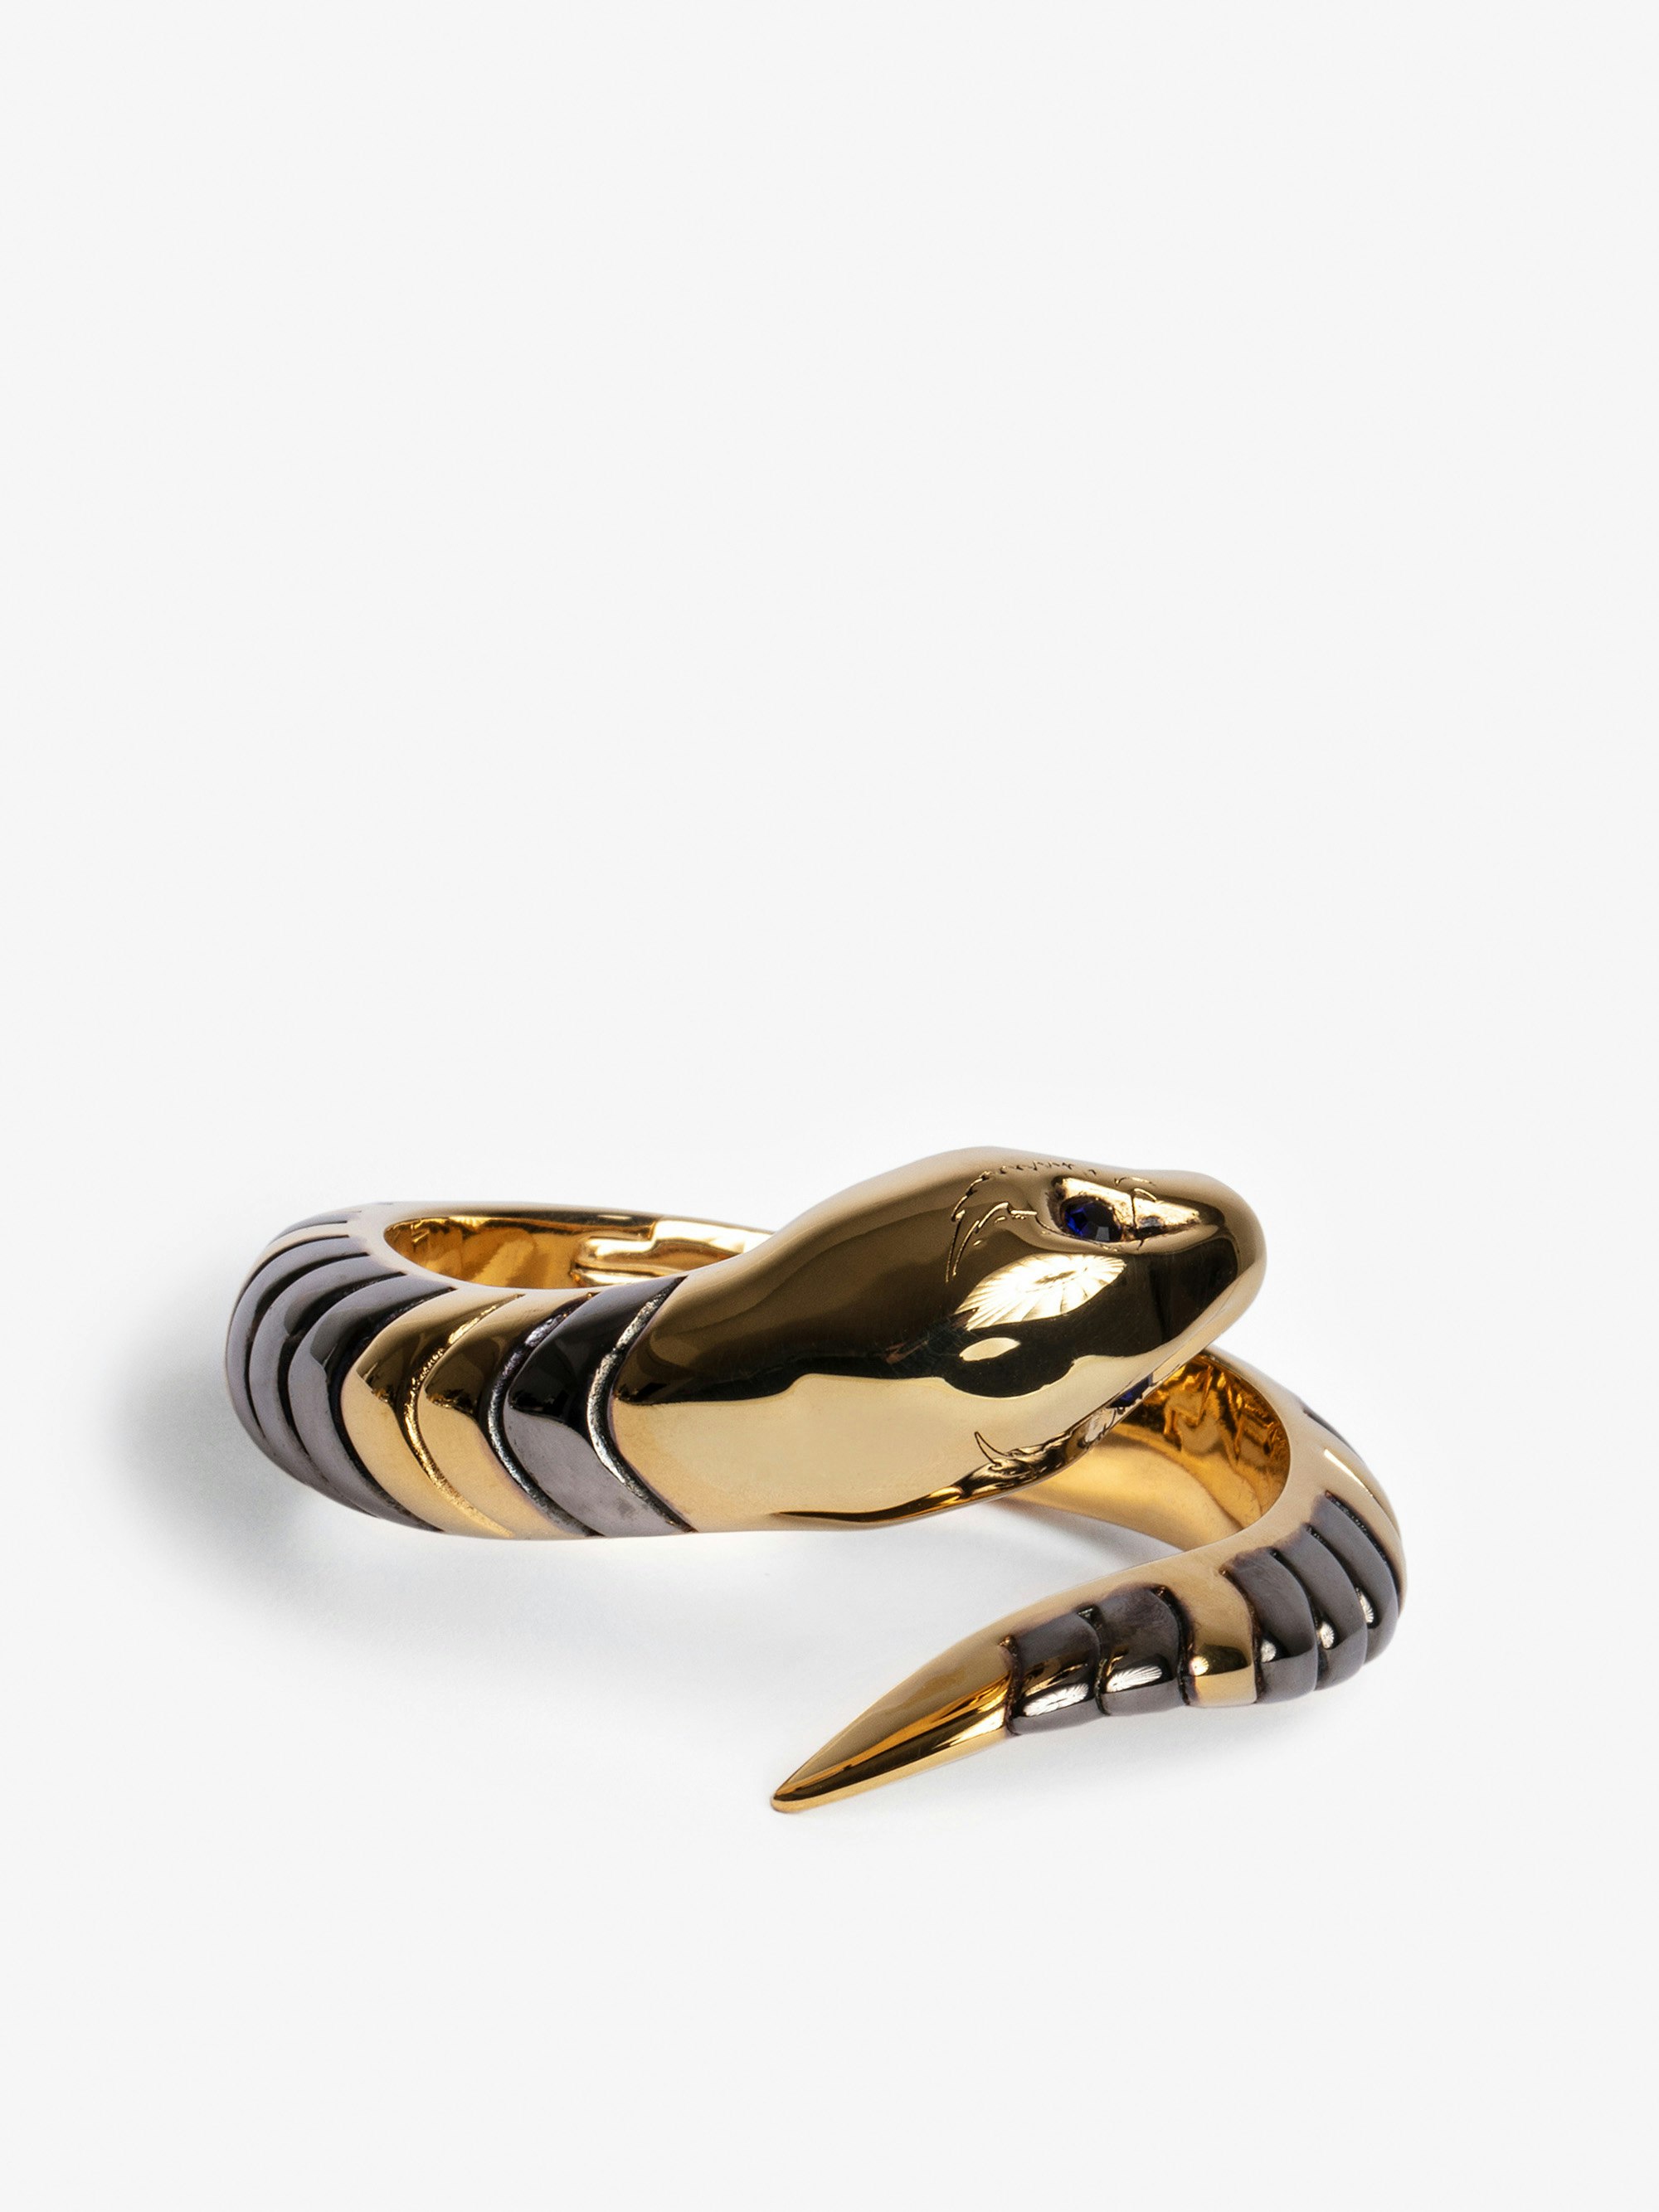 Bracelet Snake - Bracelet serpent en laiton doré.